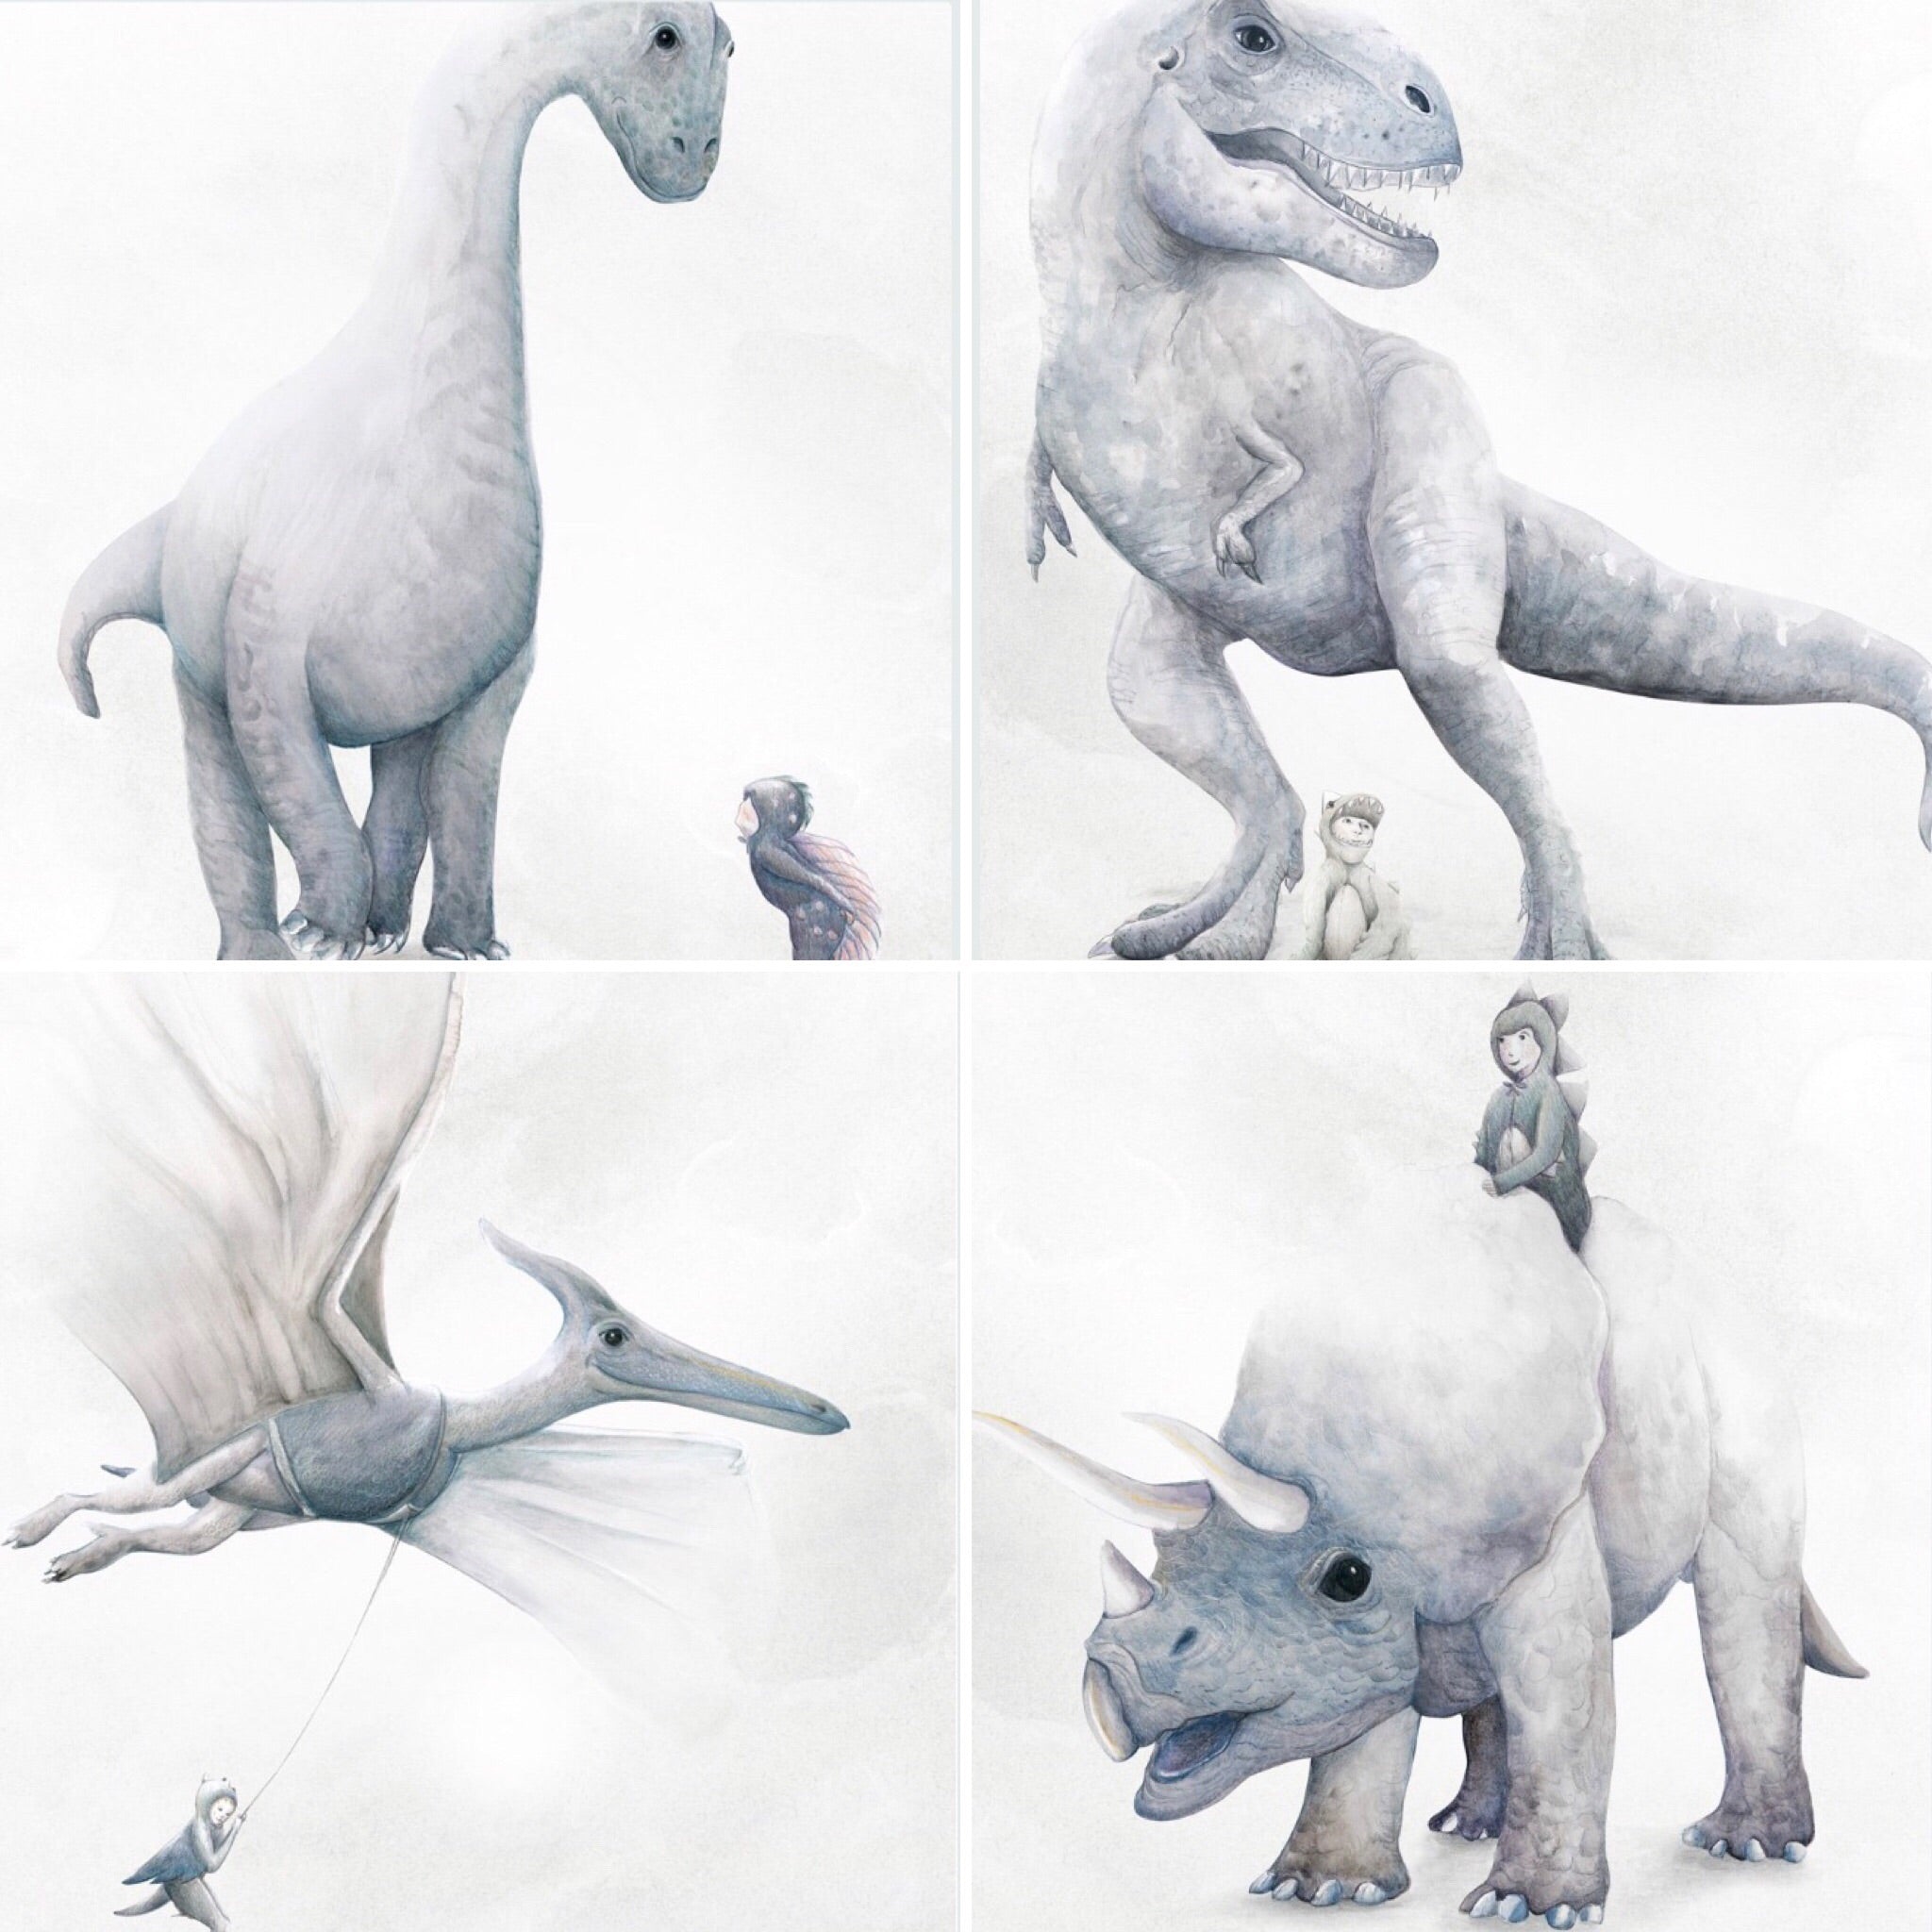 I Dream of Dinosaurs - Tyrannosaurus Rex Trex Print - $49.95 - $79.95 |The Home Maven